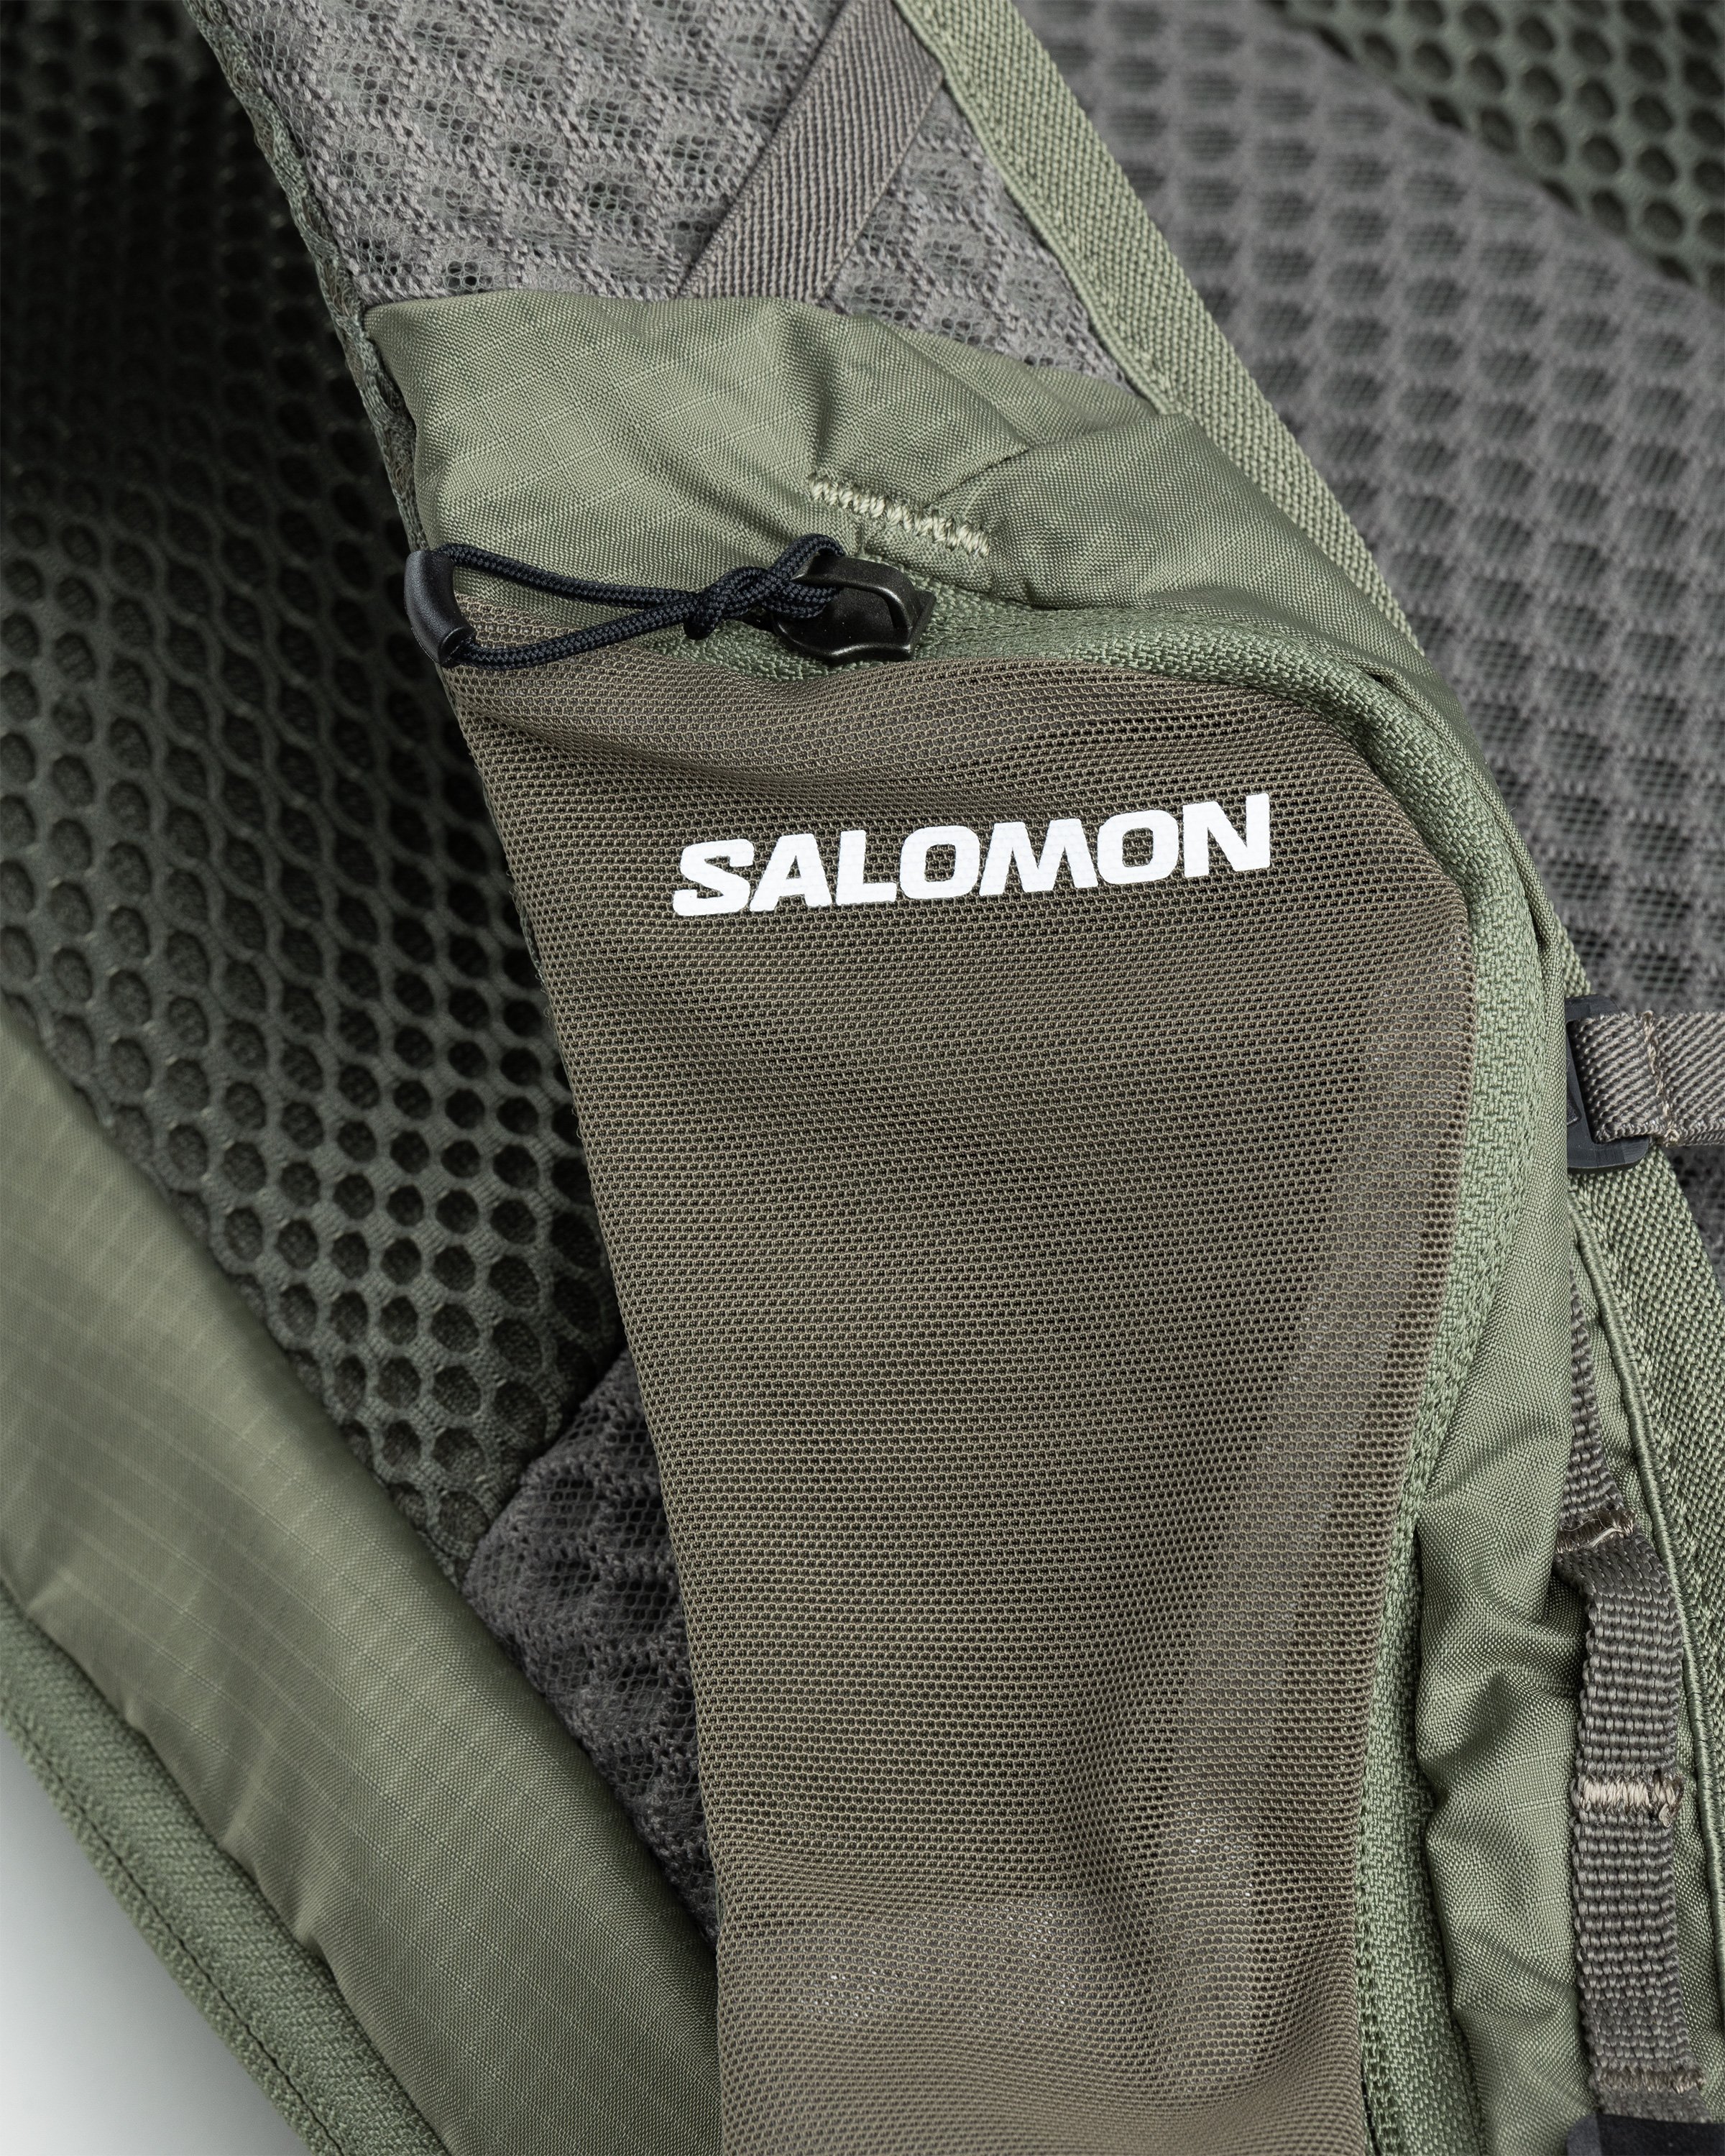 Salomon x PAS NORMAL STUDIOS - XT 20 Bag - Accessories - Green - Image 5